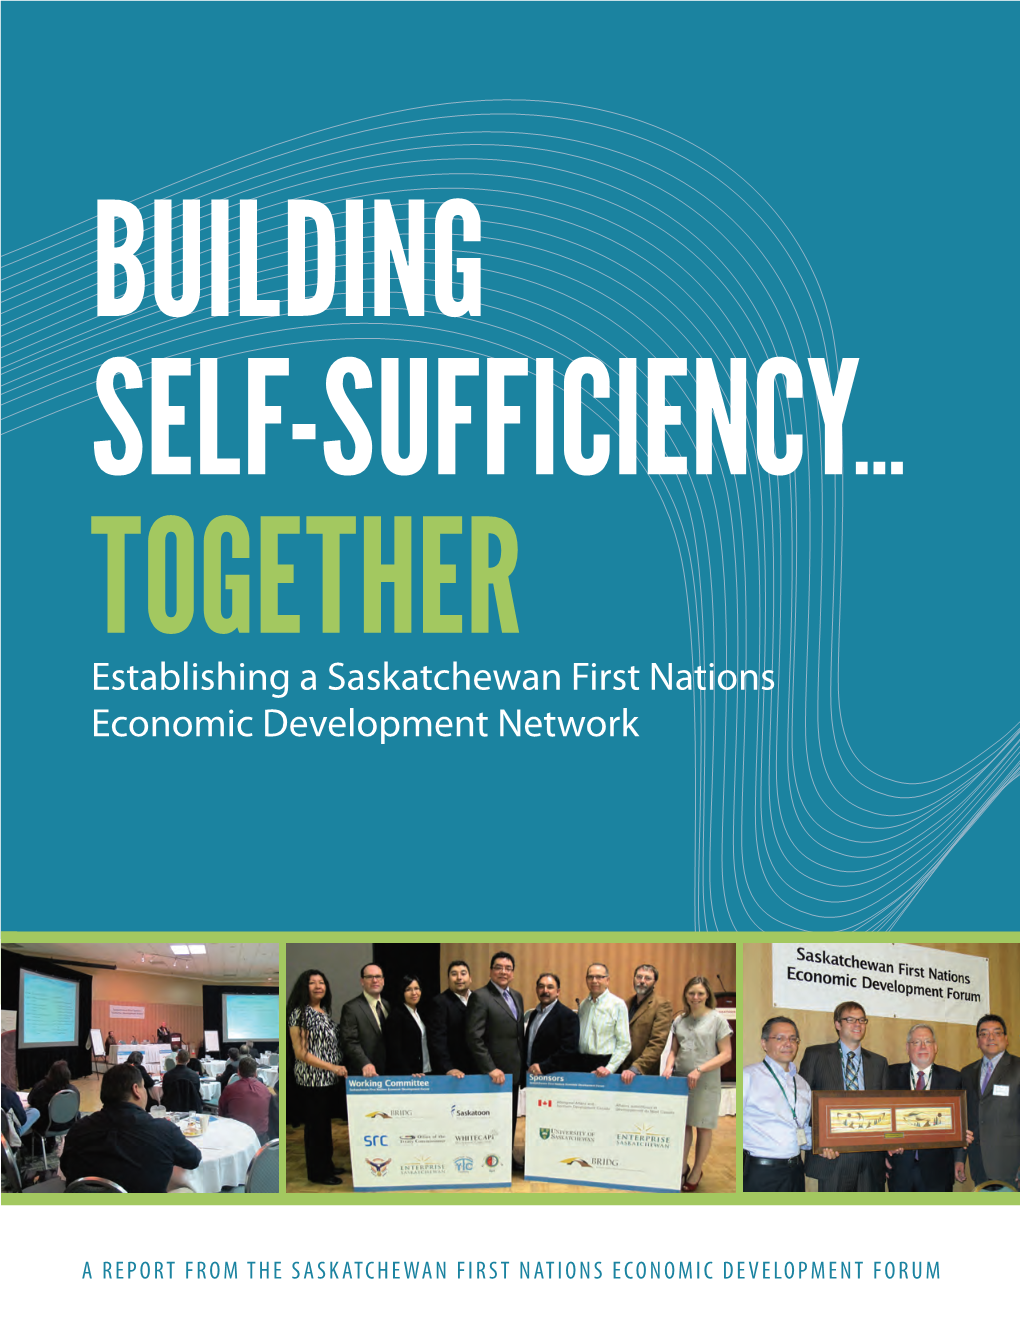 Establishing a Saskatchewan First Nations Economic Development Network